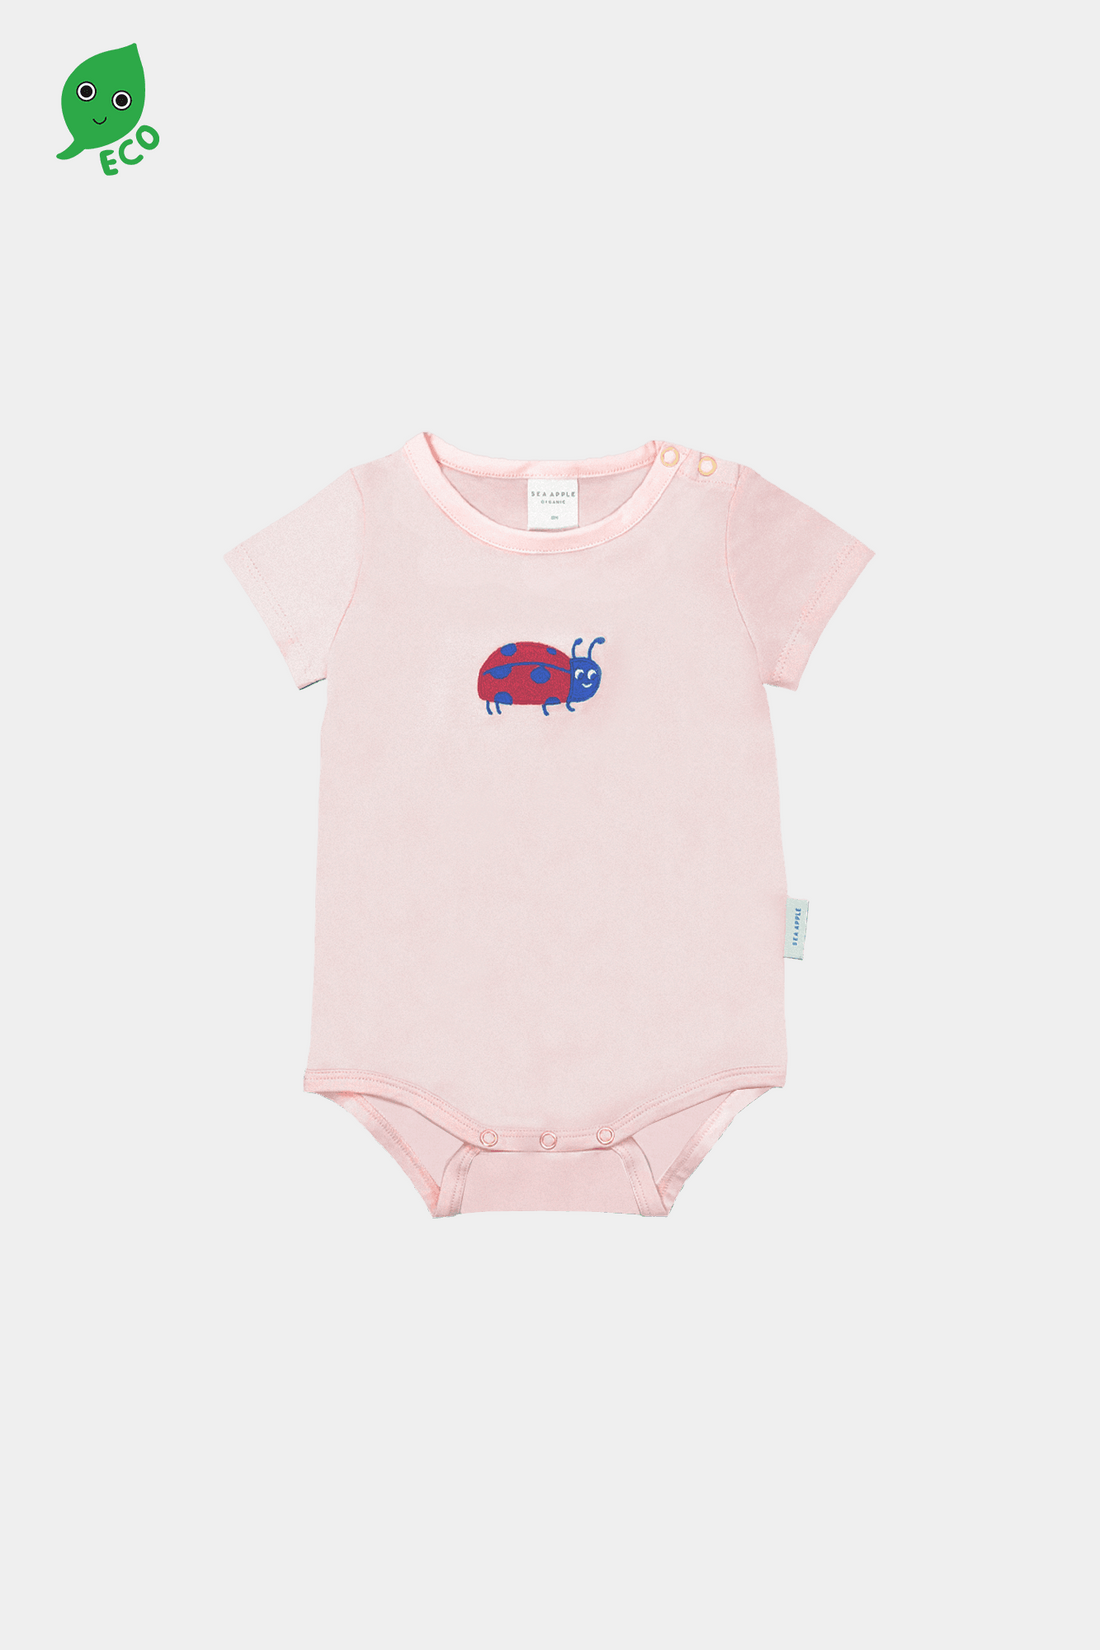 Modern Organic Newborn Baby Clothes Online Store